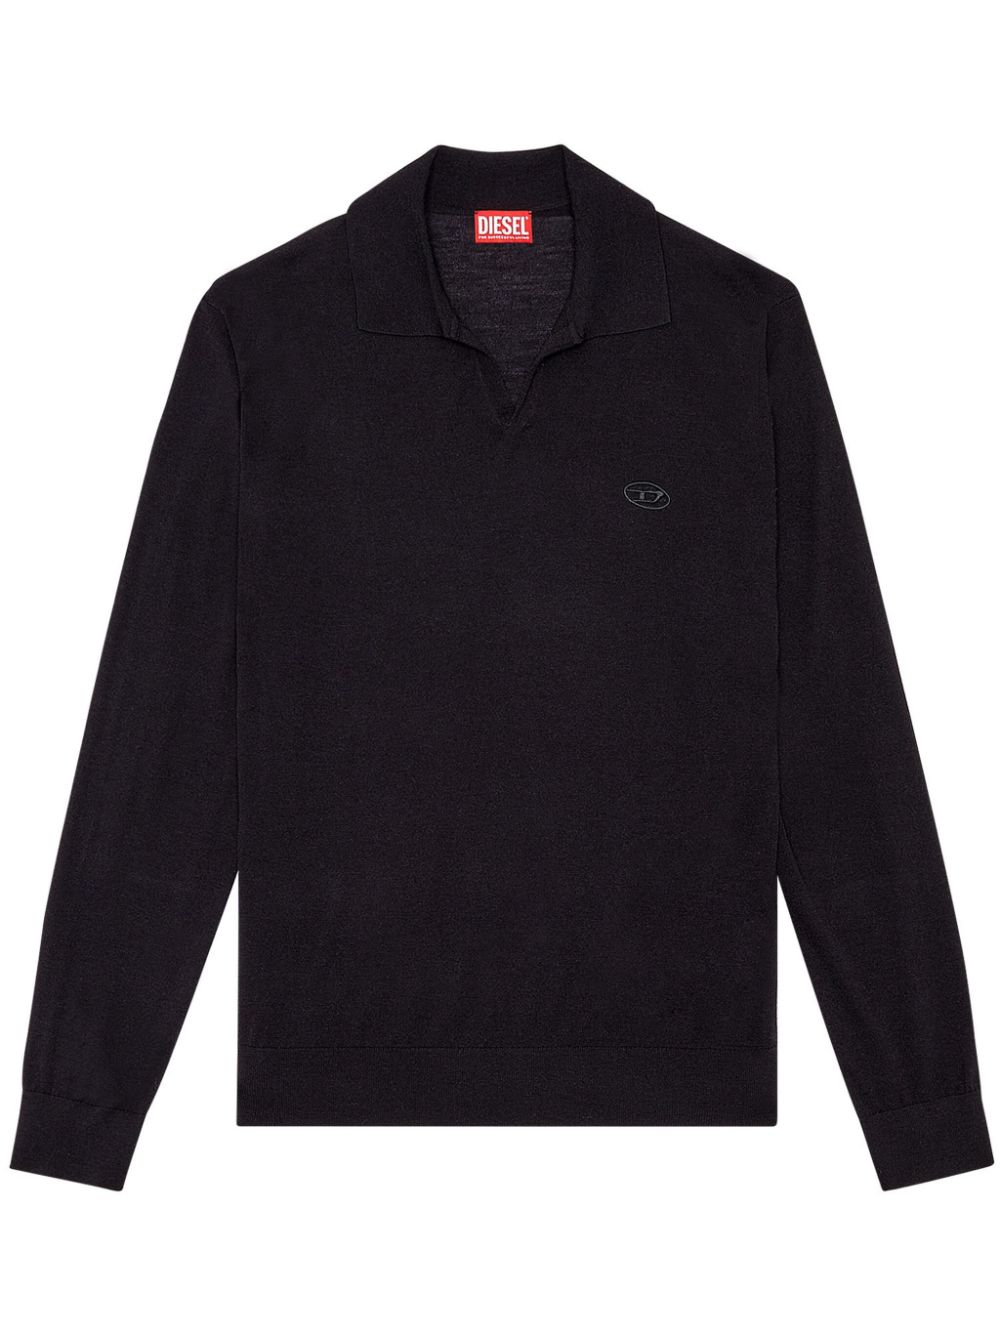 Diesel K-glare Wool Polo Shirt In Black